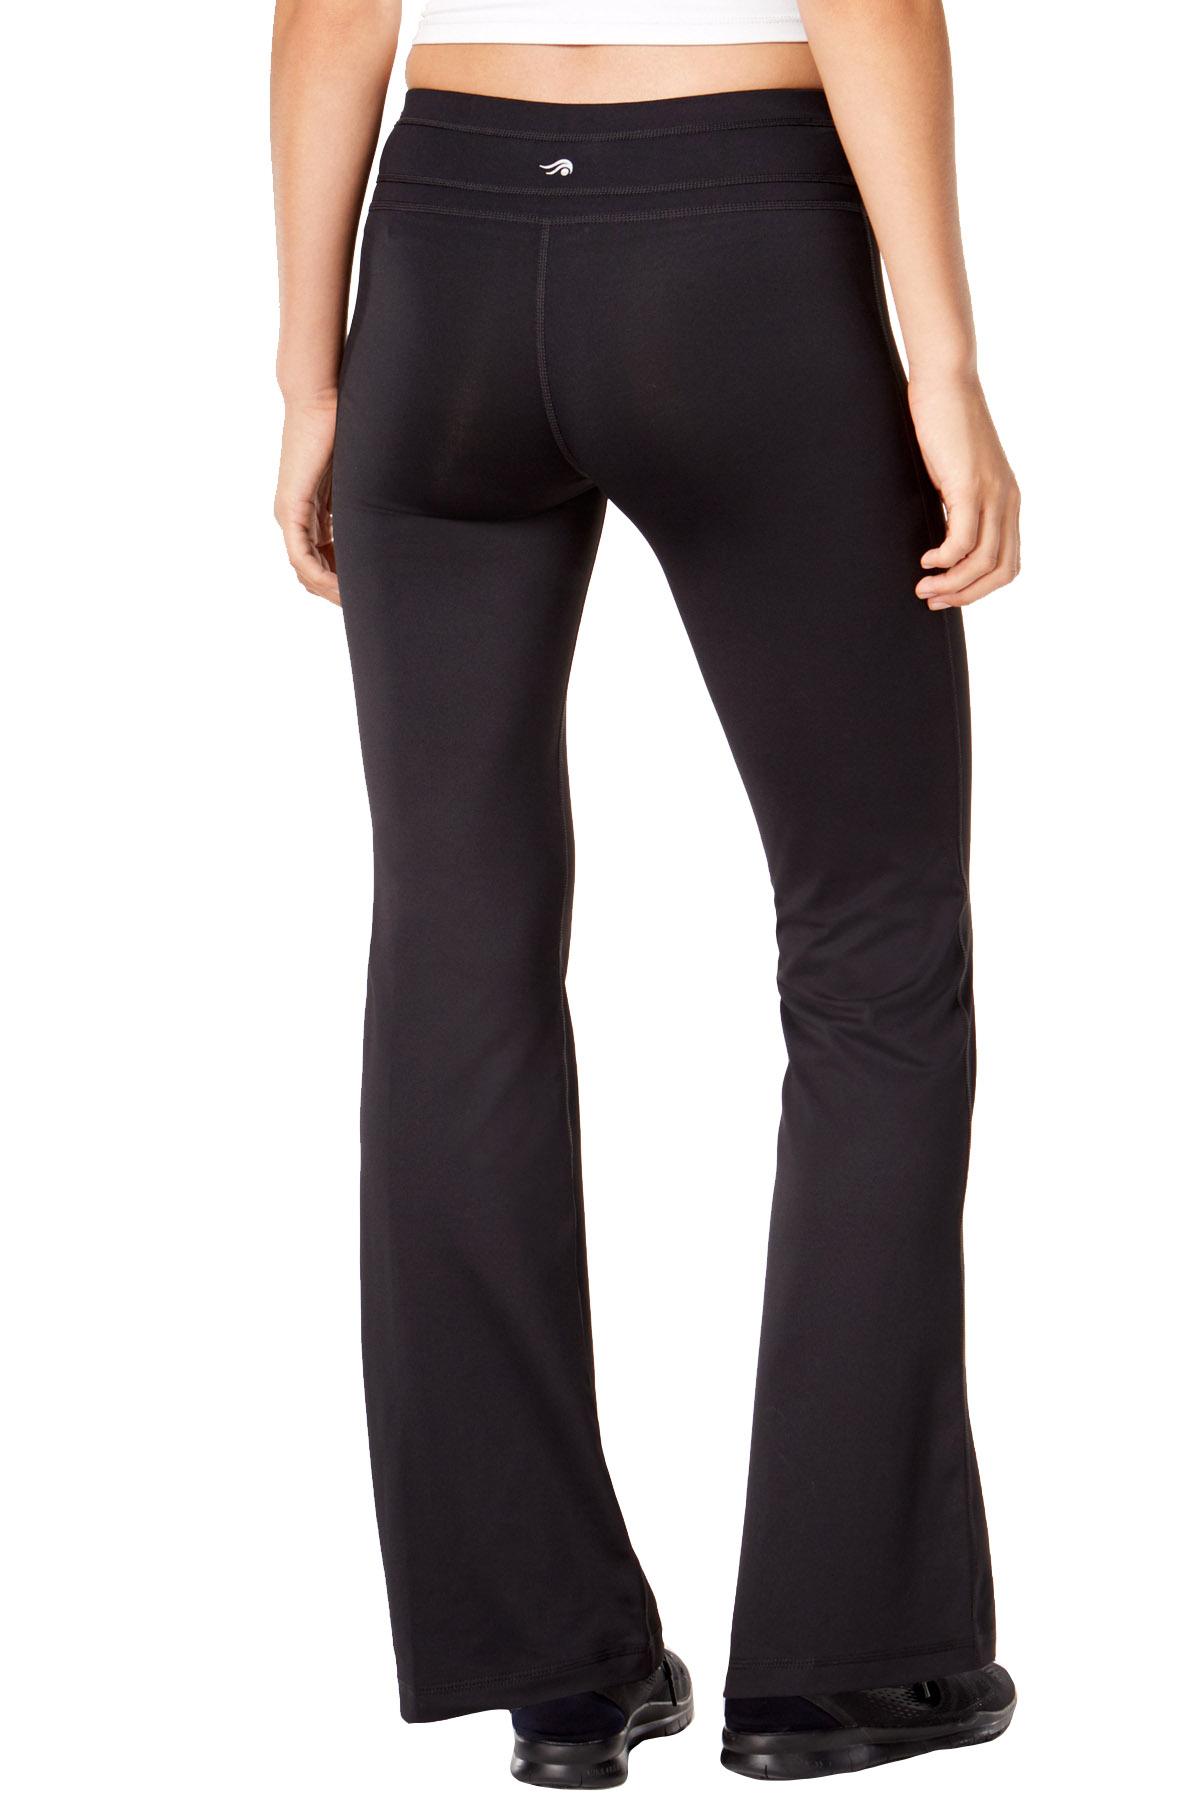 Frontwalk Yoga Pants for Women Stretch Sportswear Boocut Tummy